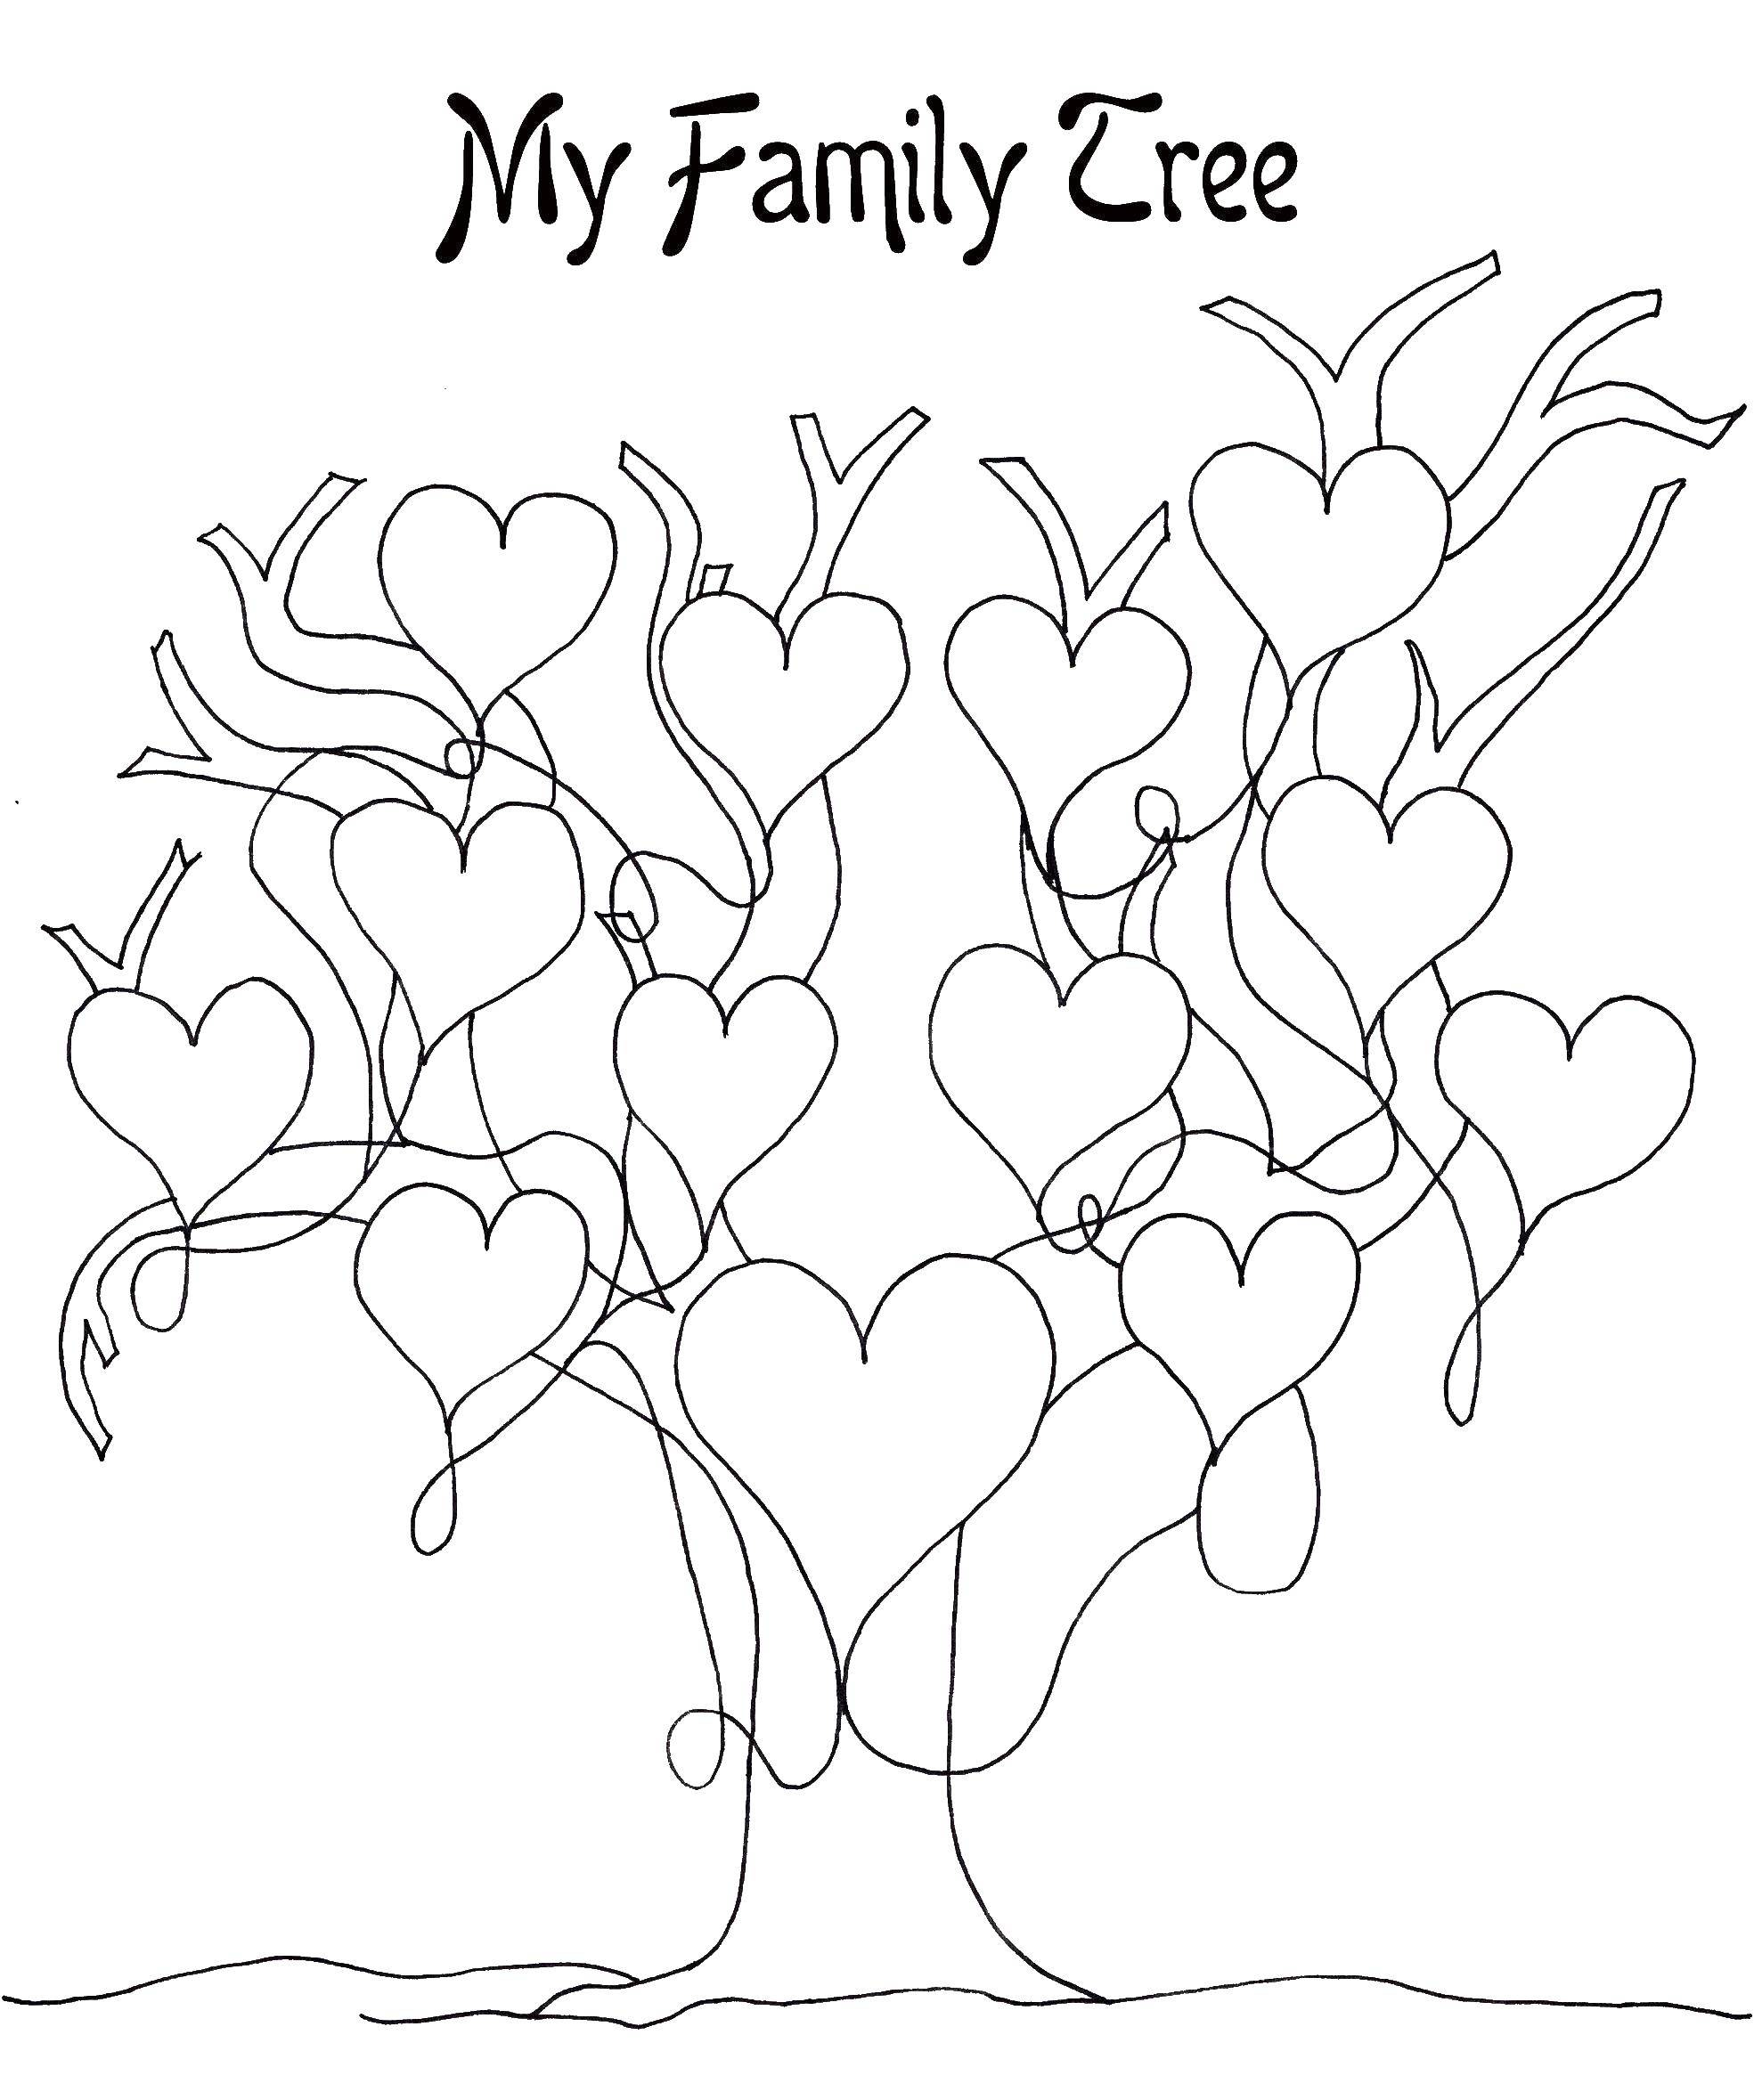 Coloring Tree with hearts. Category Family tree. Tags:  tree, hearts.